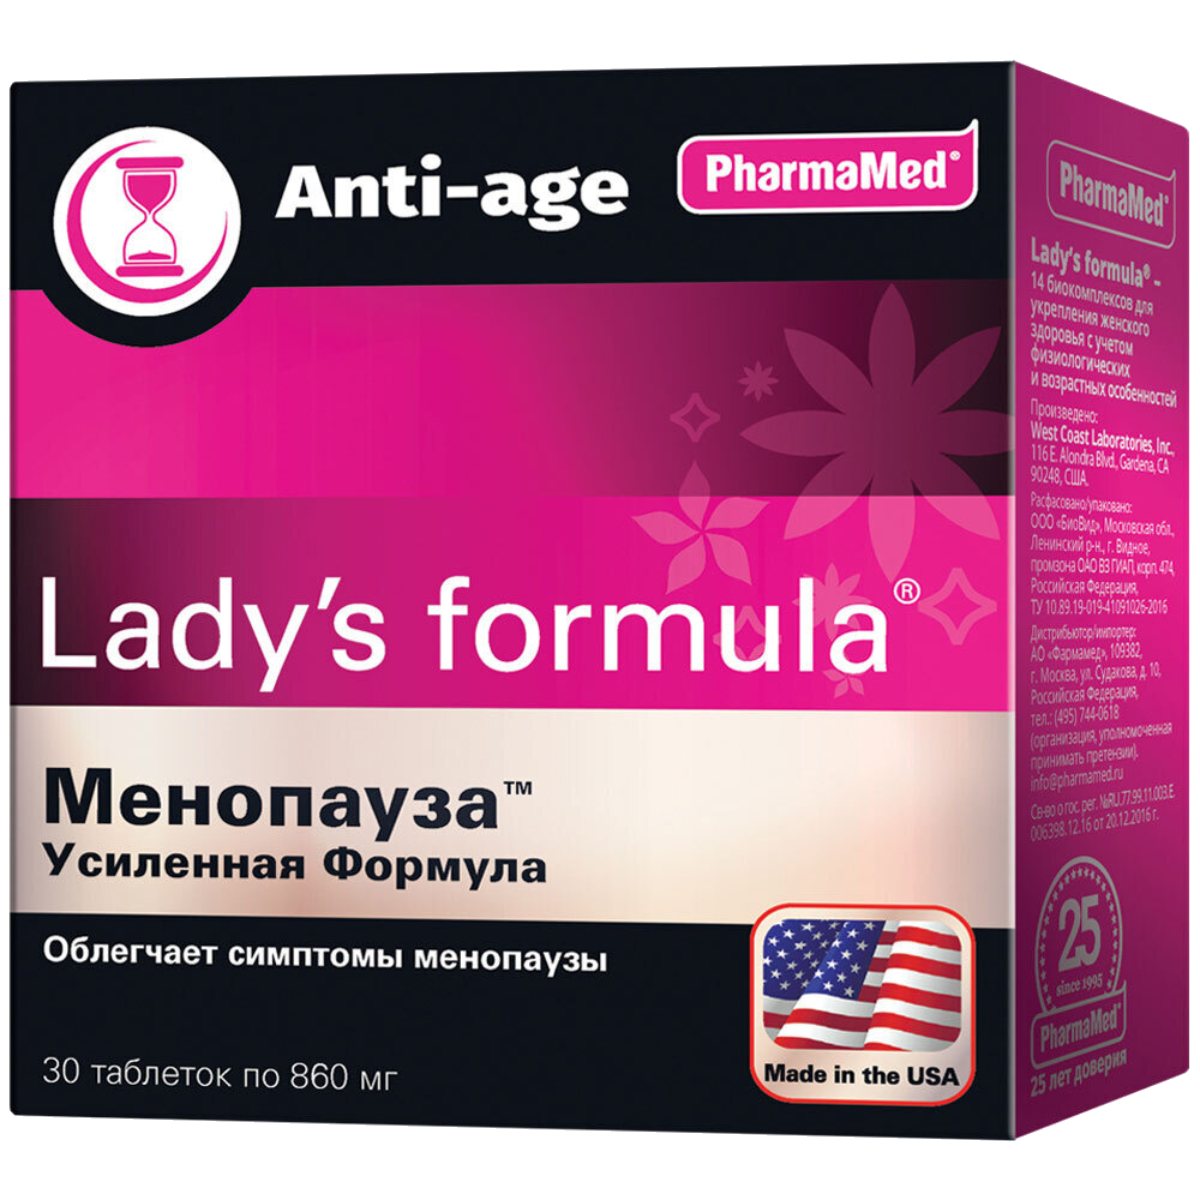 Lady's Formula менопауза, усиленная формула, 30 таблеток, PharmaMed